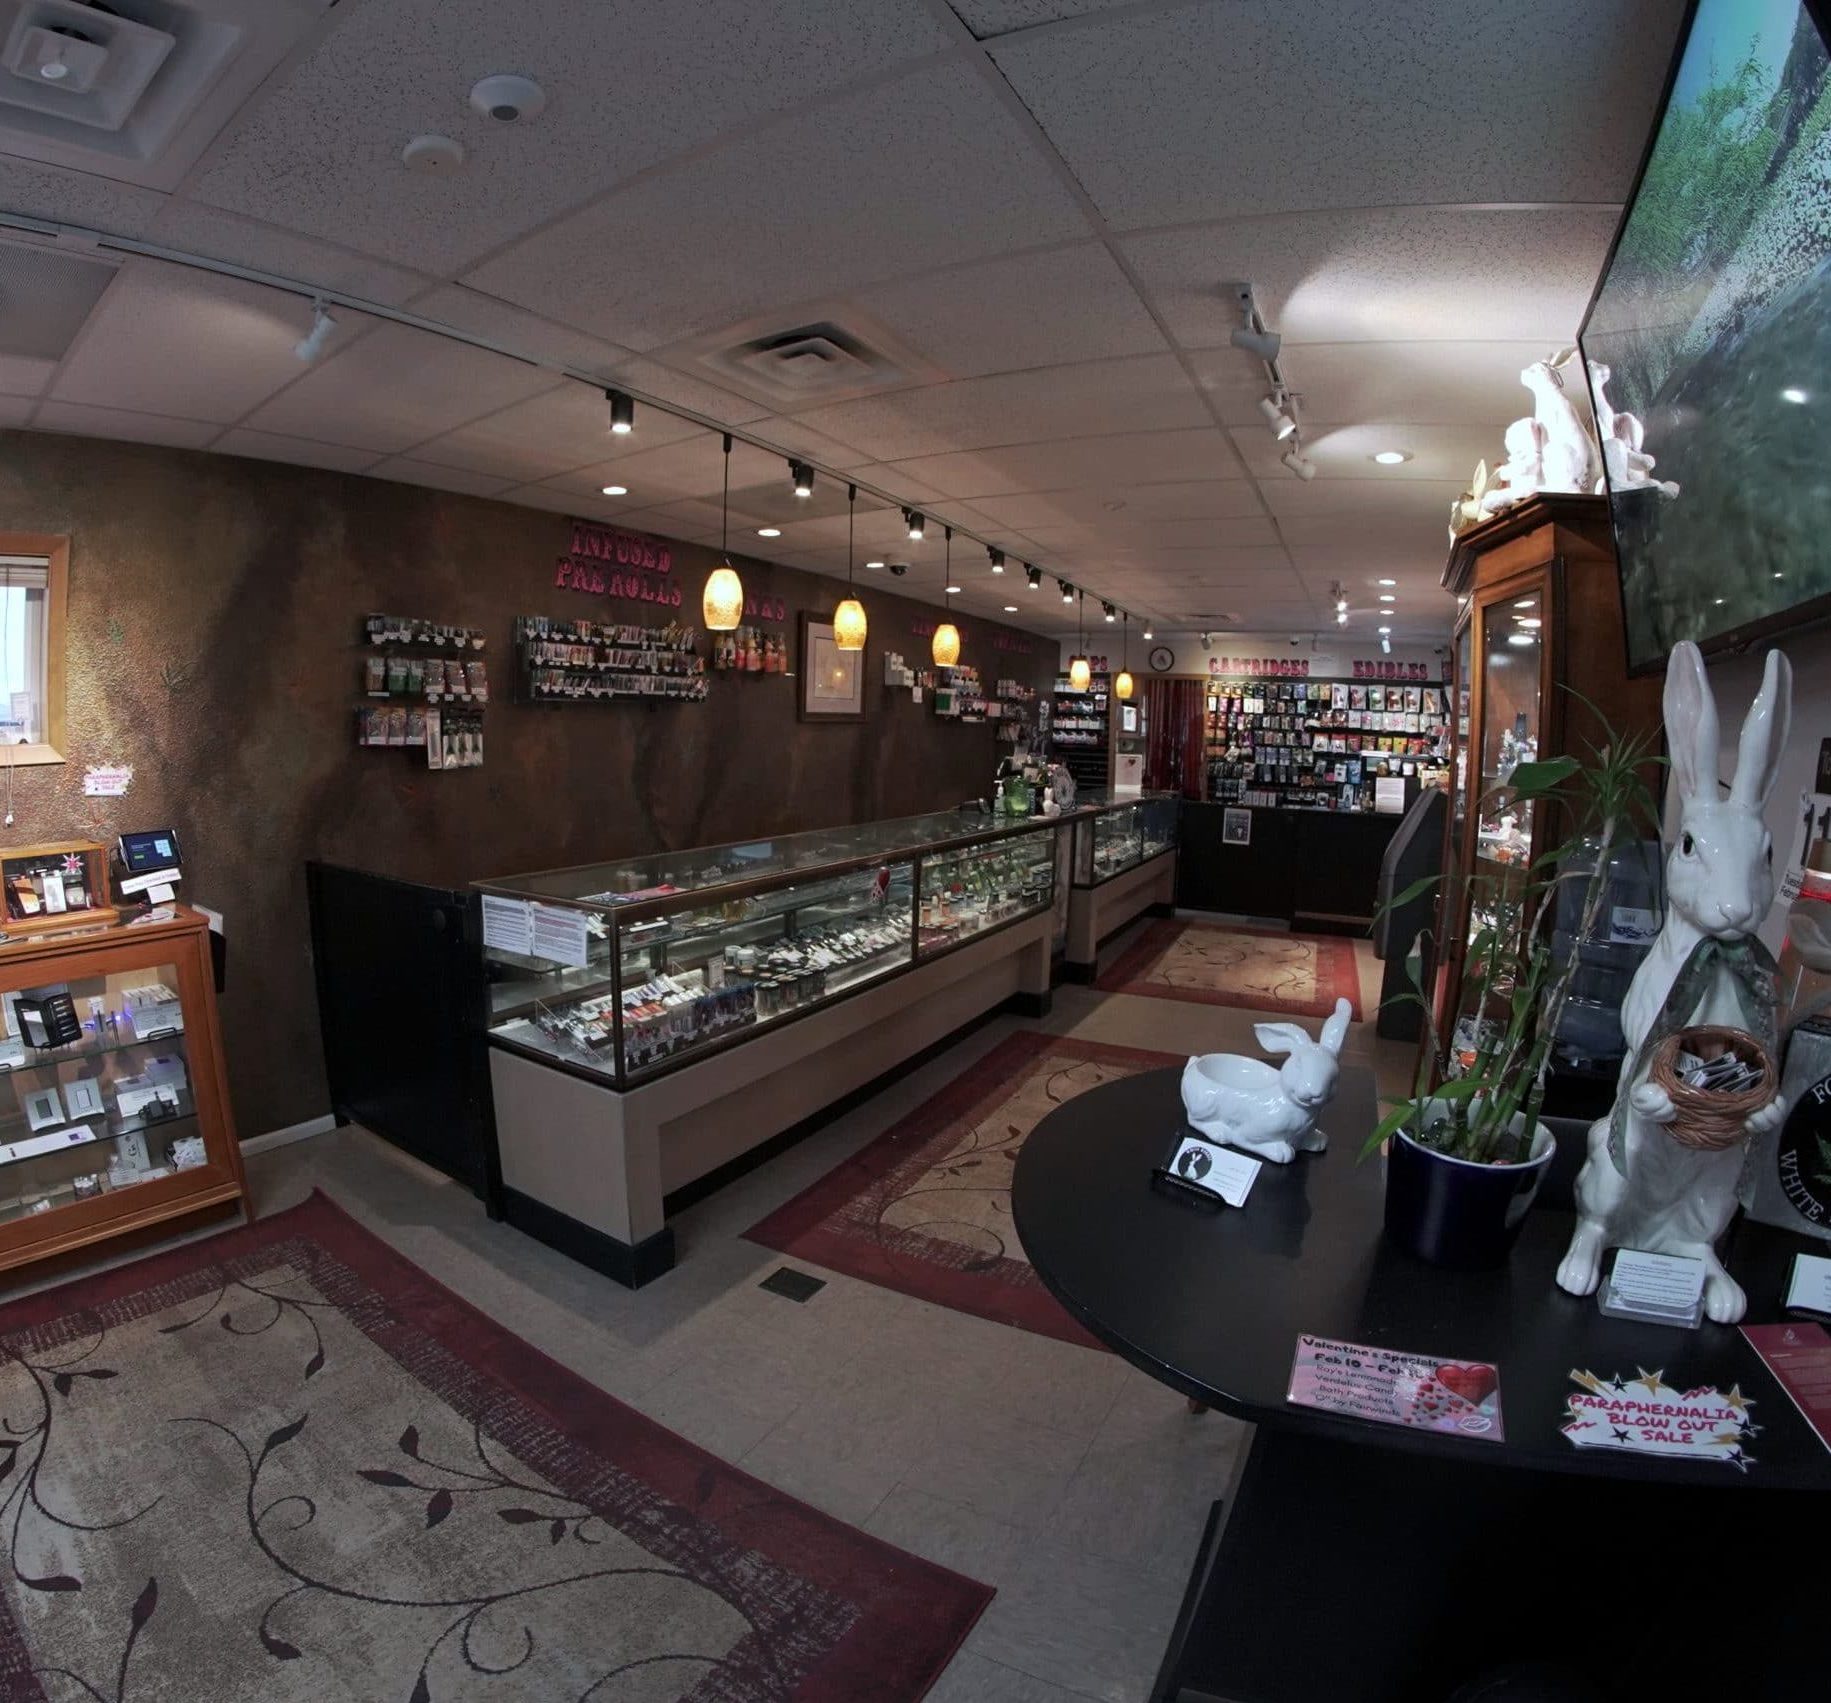 white rabbit cannabis franchise shop interior